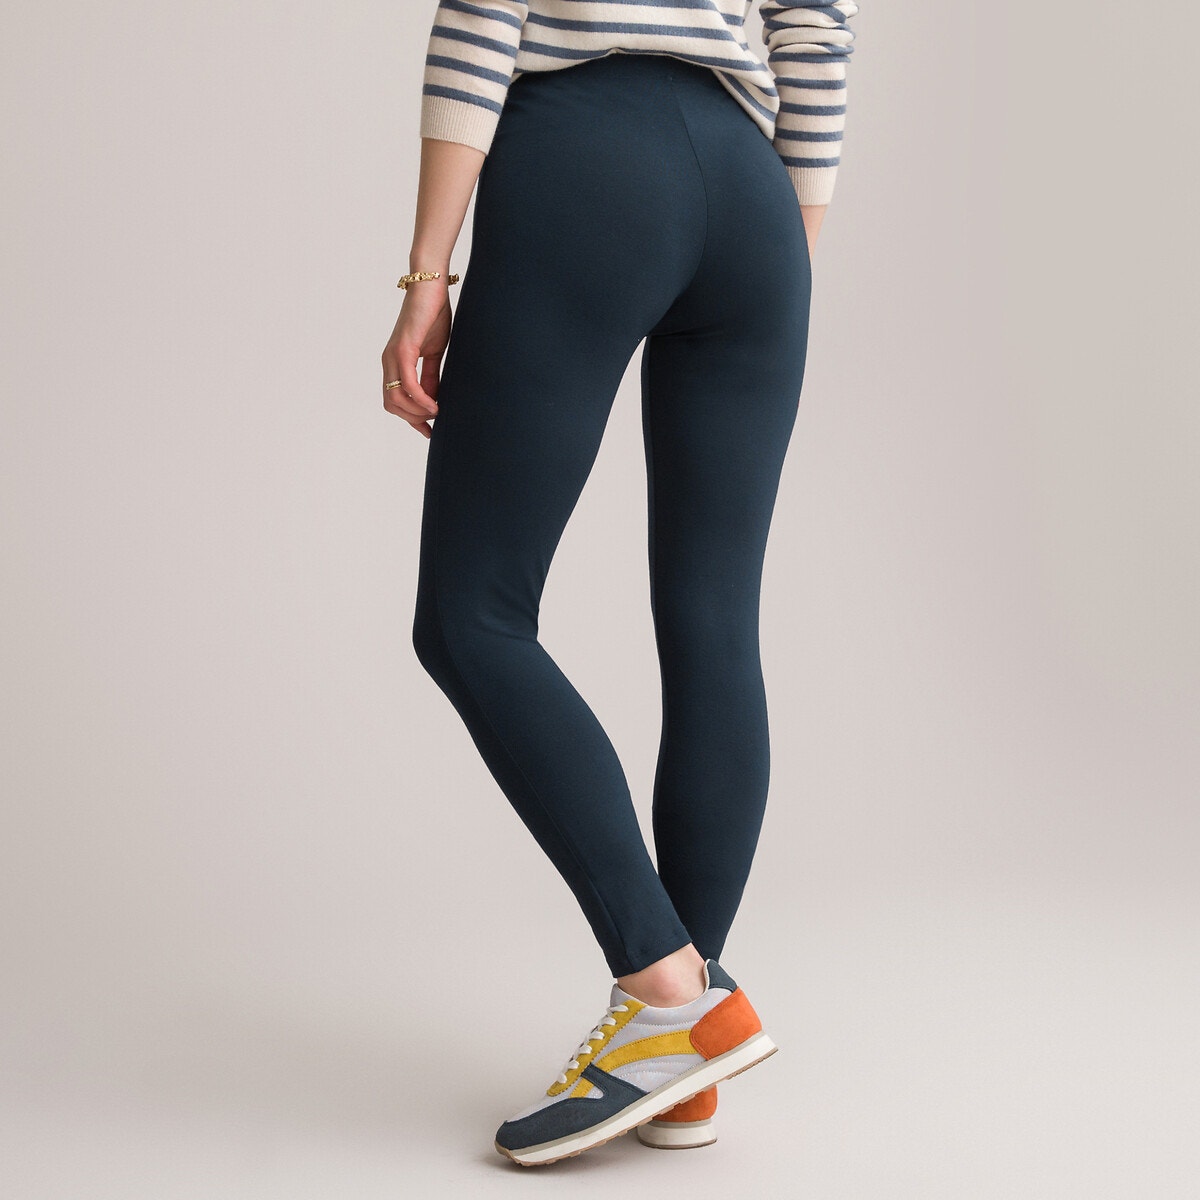 Legging Ultra Moulant Femme : 22 couleurs & Styles